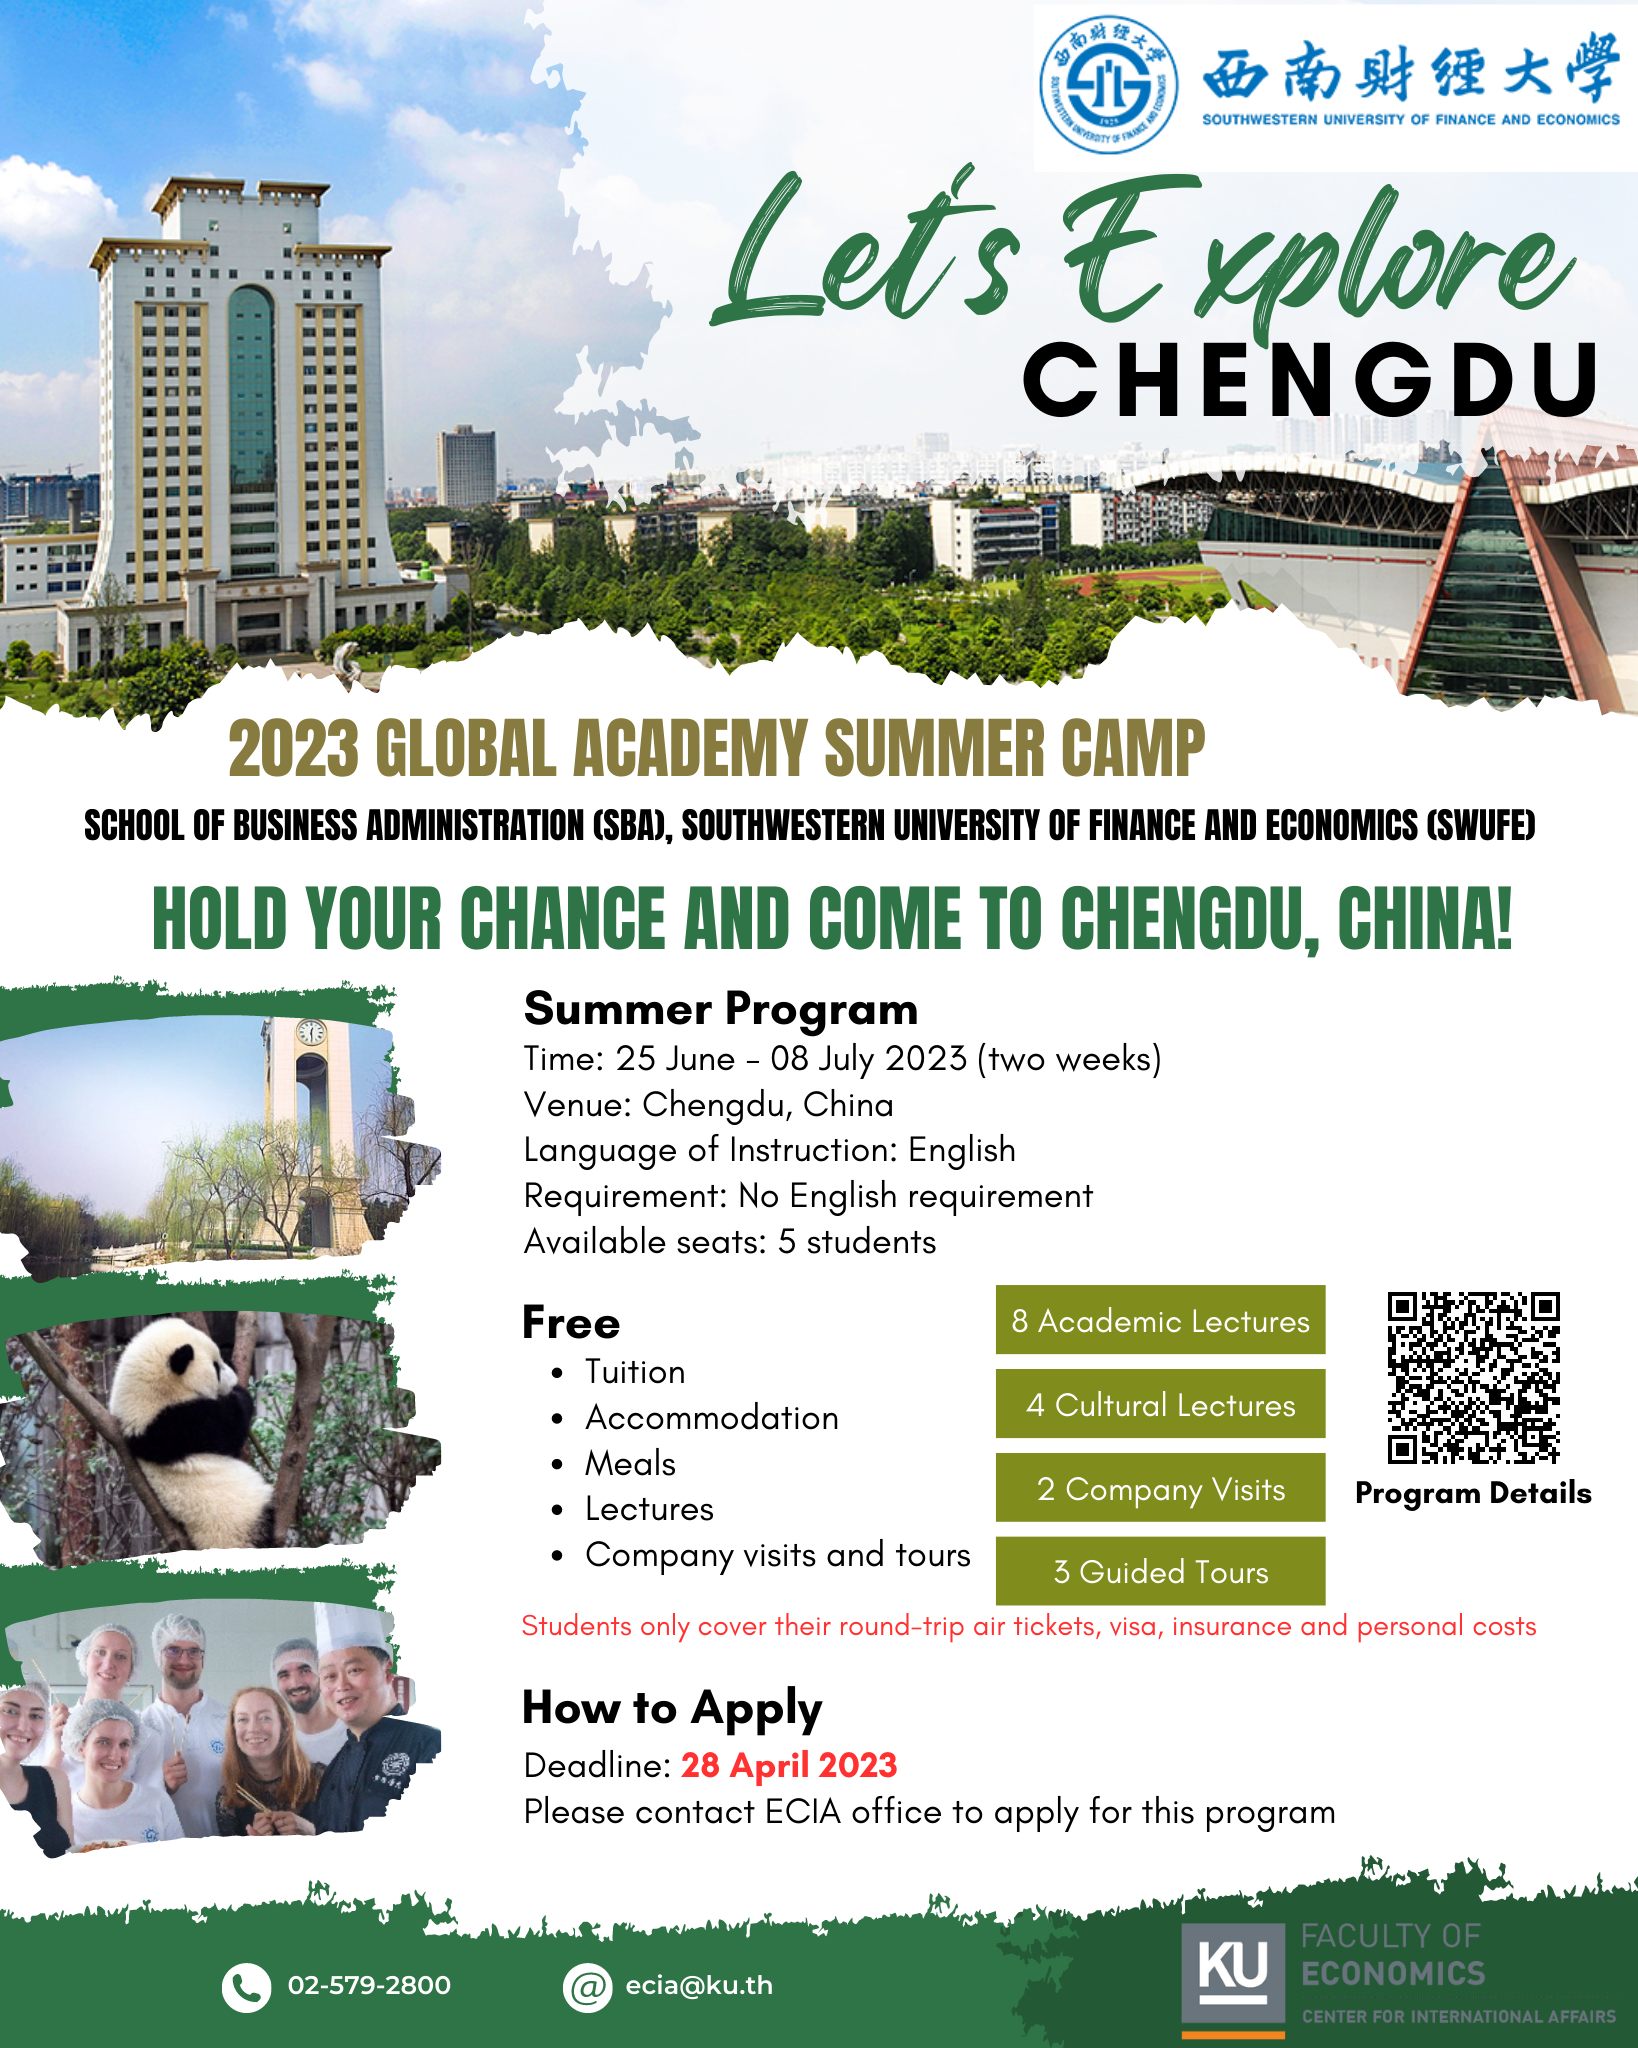 2023 Global Academy Summer Camp in Chengdu